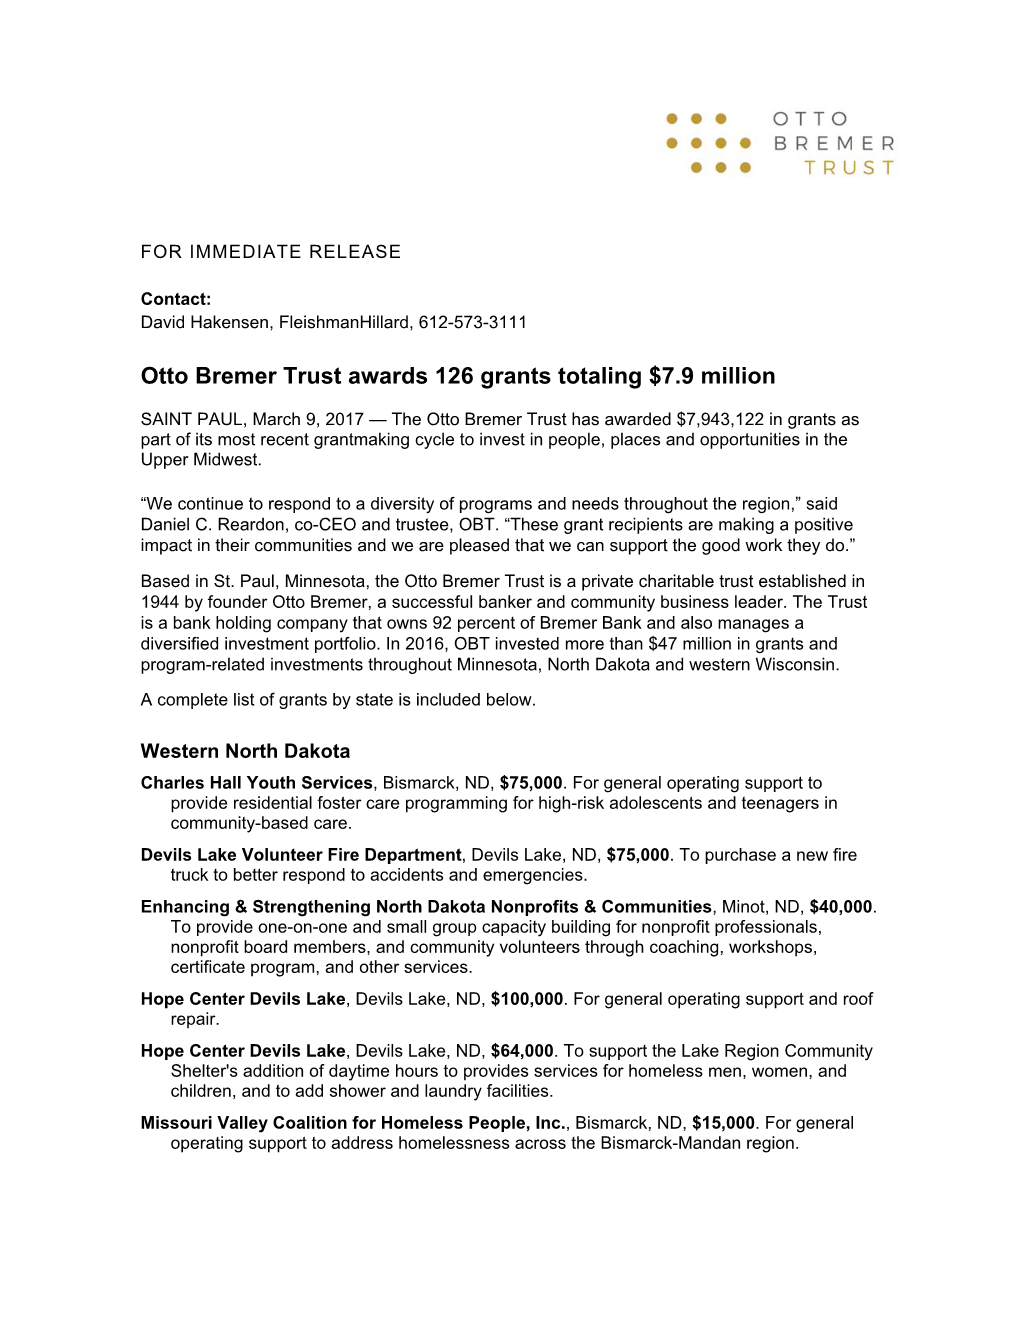 Otto Bremer Trust Awards 126 Grants Totaling $7.9 Million